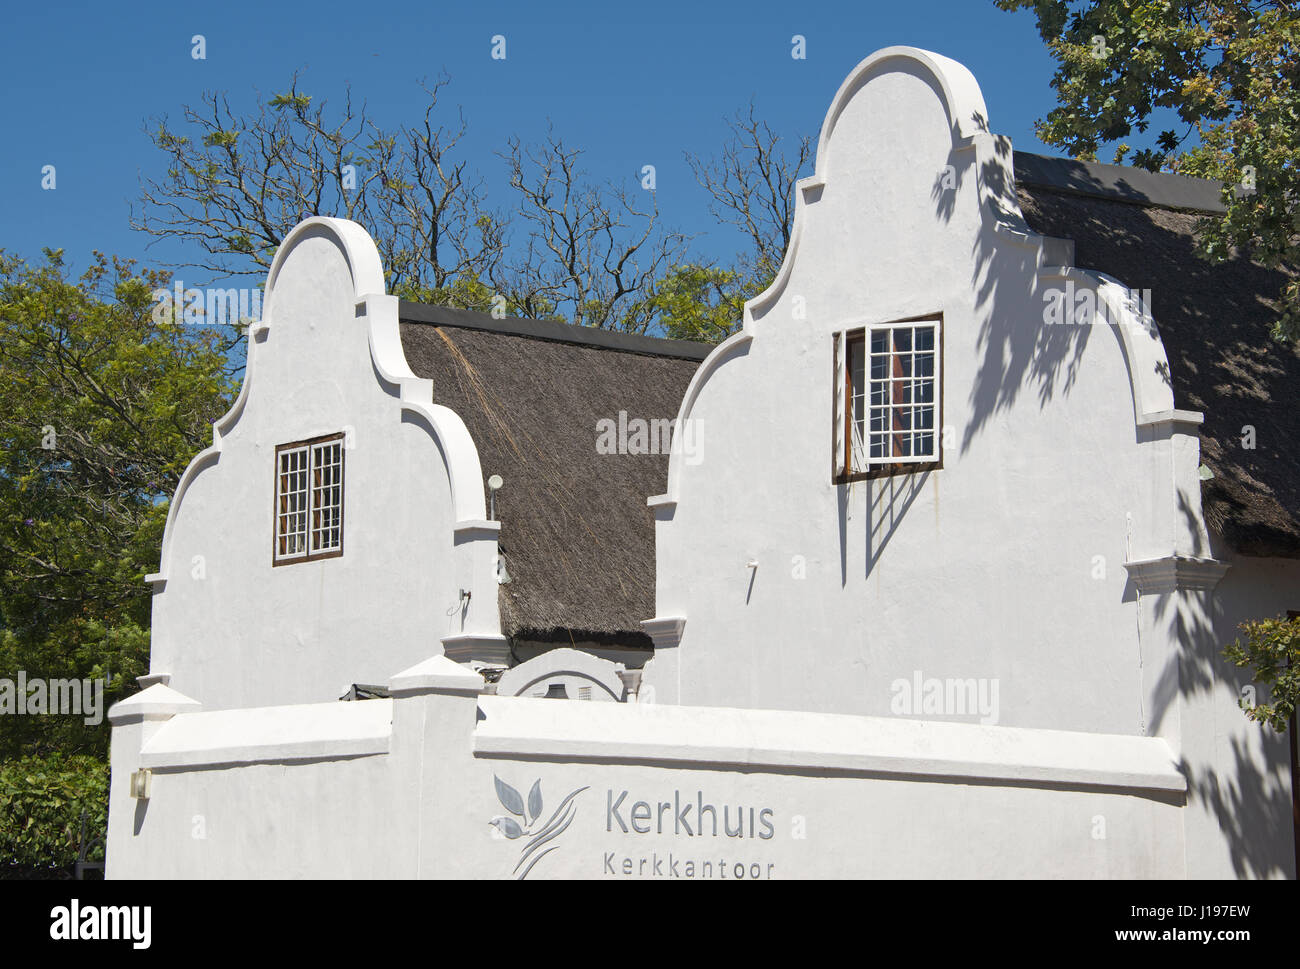 Dutch gable roof Kerkhuis Church House Stellenbosch Western Cape South Africa Stock Photo